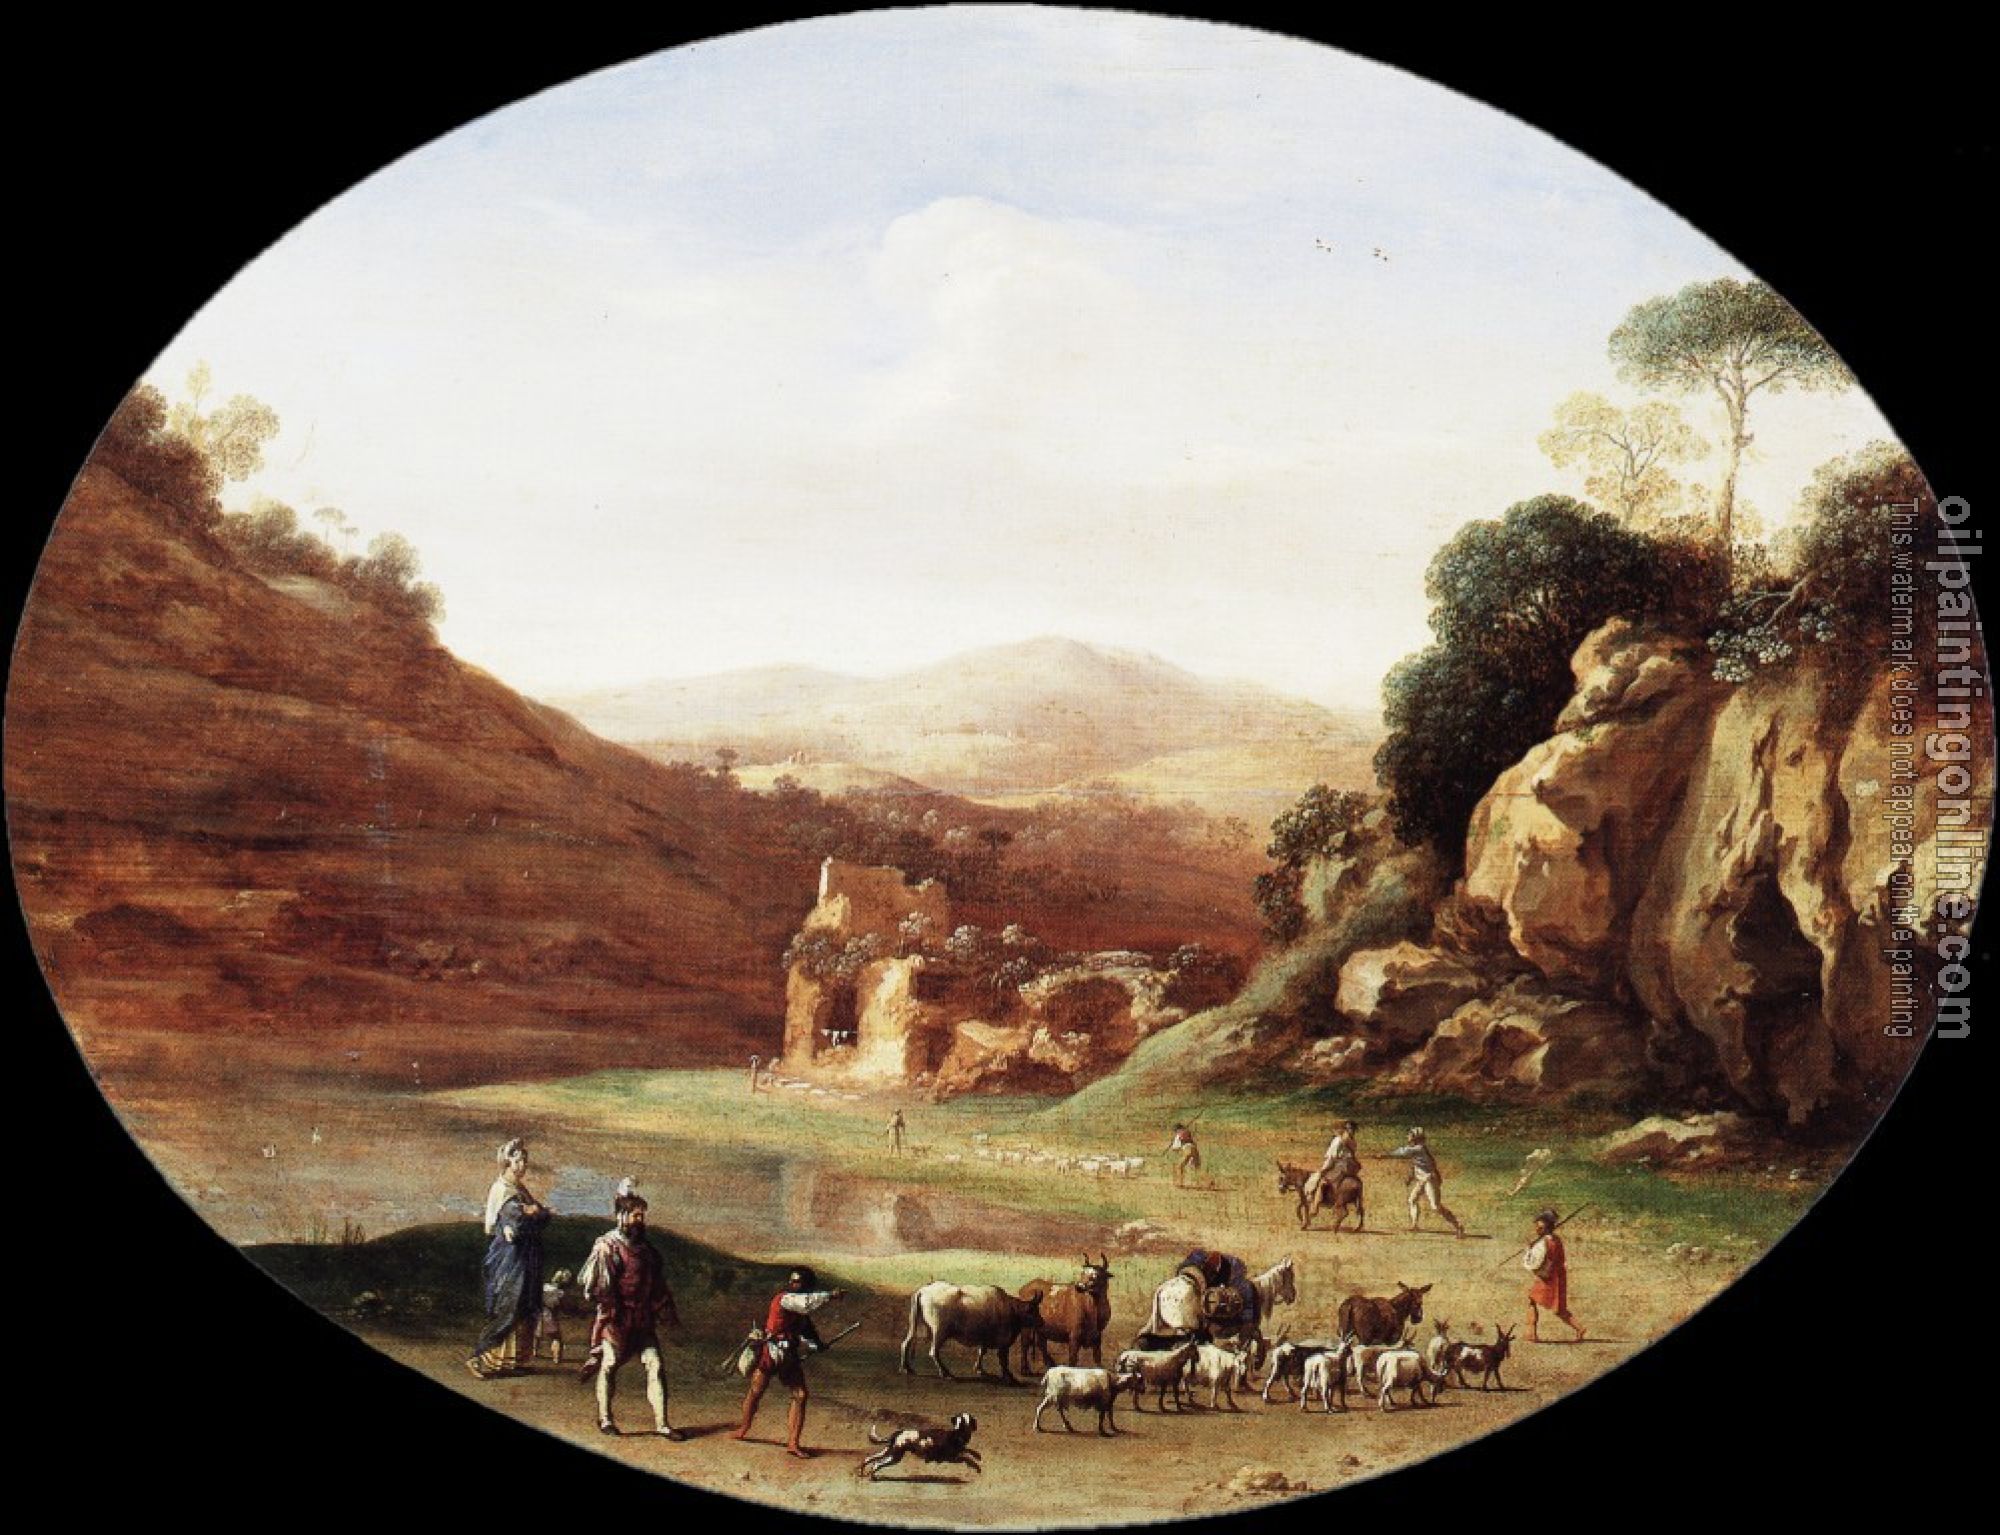 Cornelis van Poelenburgh - Poelenb Valley